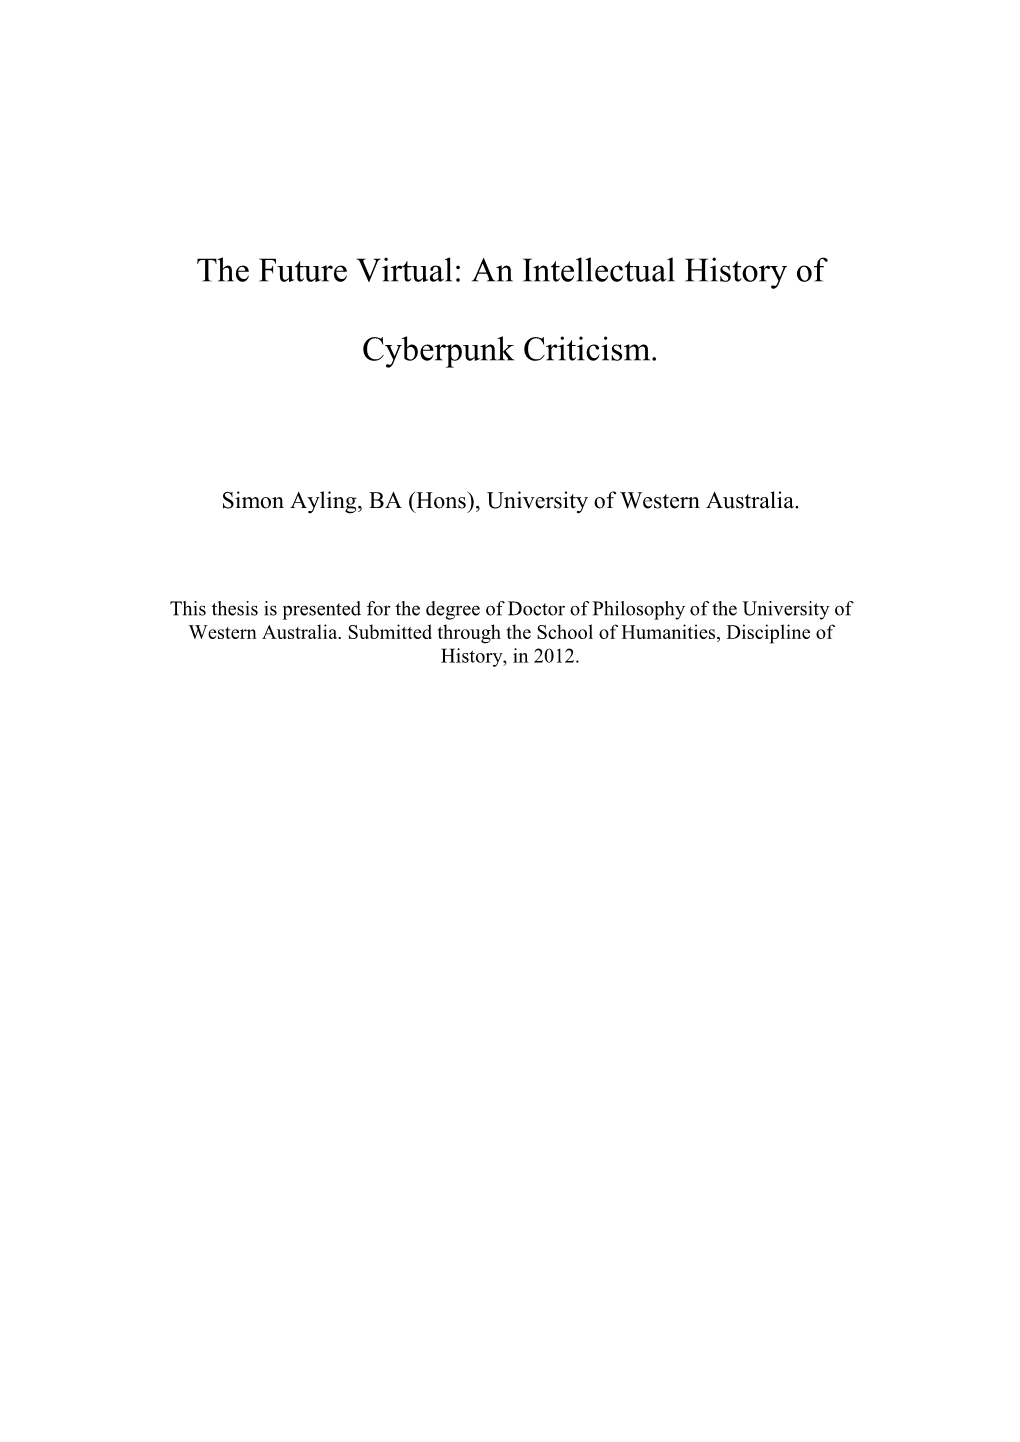 An Intellectual History of Cyberpunk Criticism